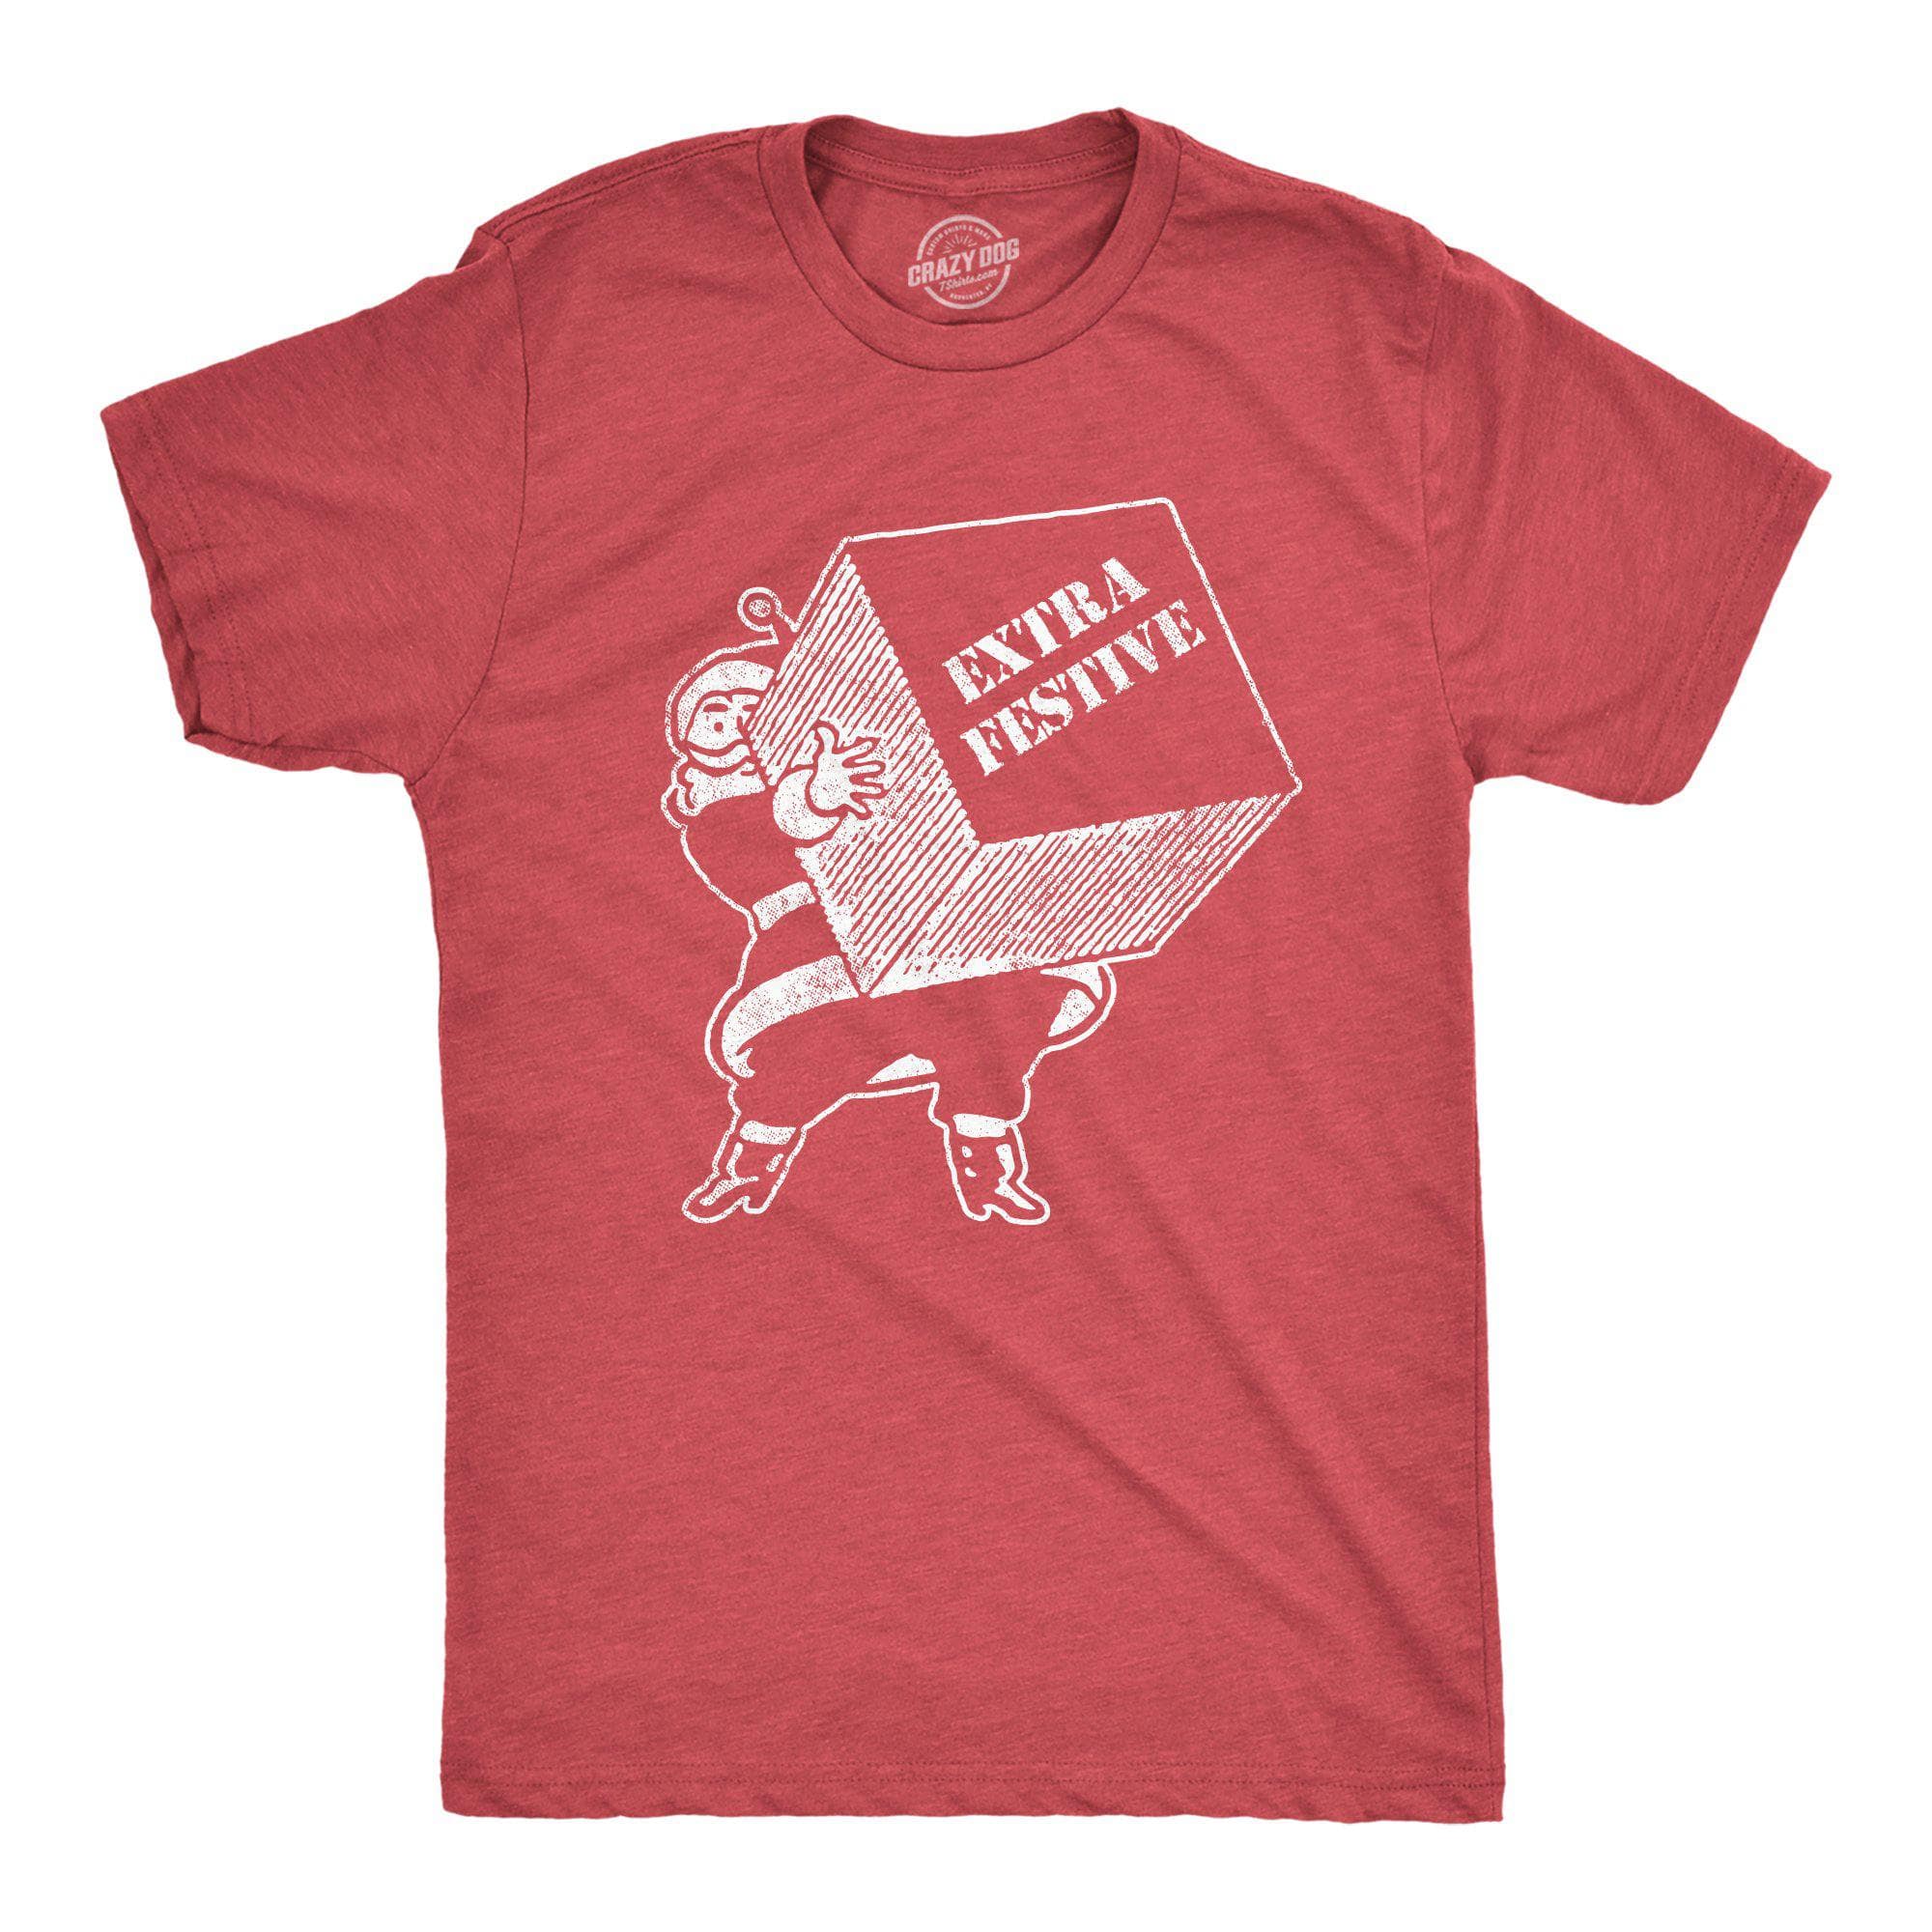 Extra Festive Men's Tshirt - Crazy Dog T-Shirts